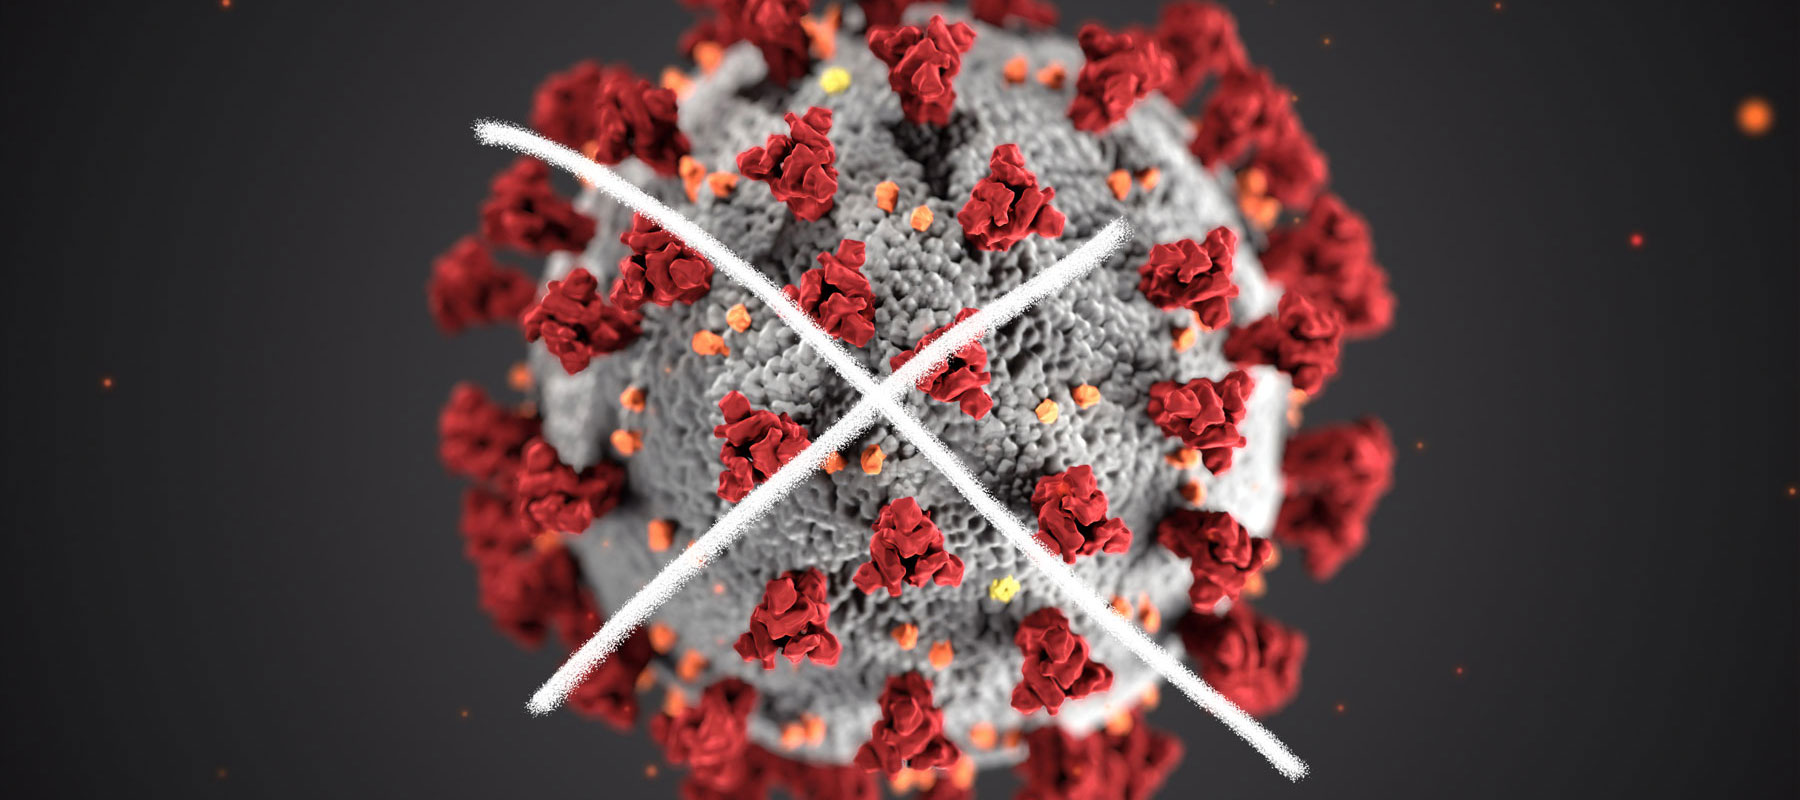 5 things DMOs can do awaiting the impact of coronavirus / COVID-19